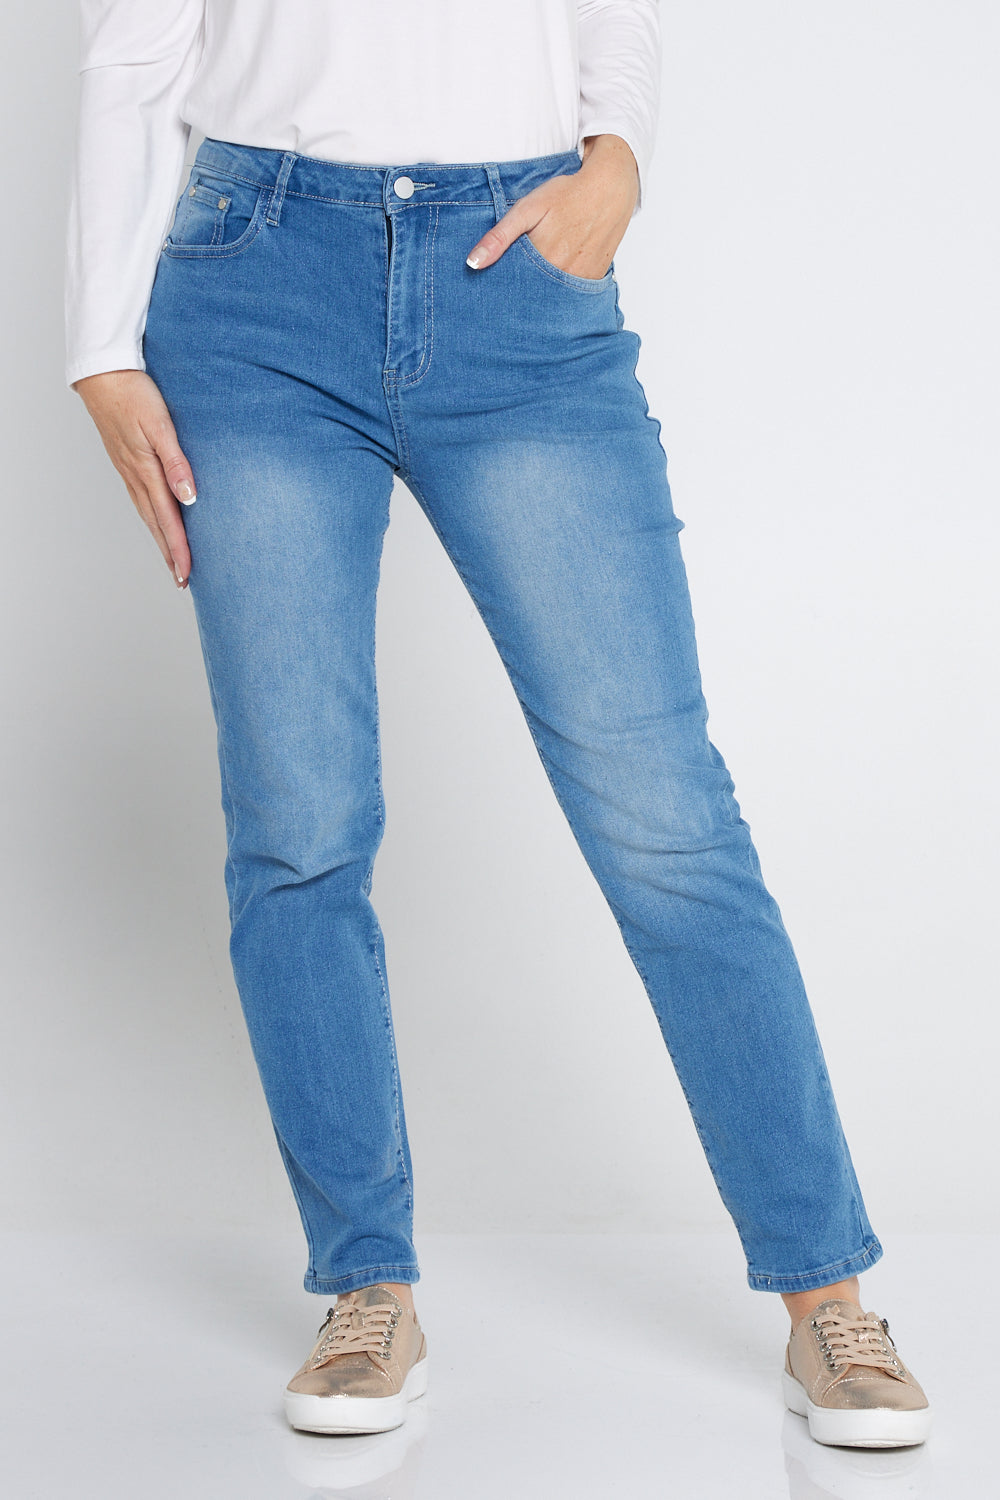 Savannah Cotton Jeans - Mid Denim